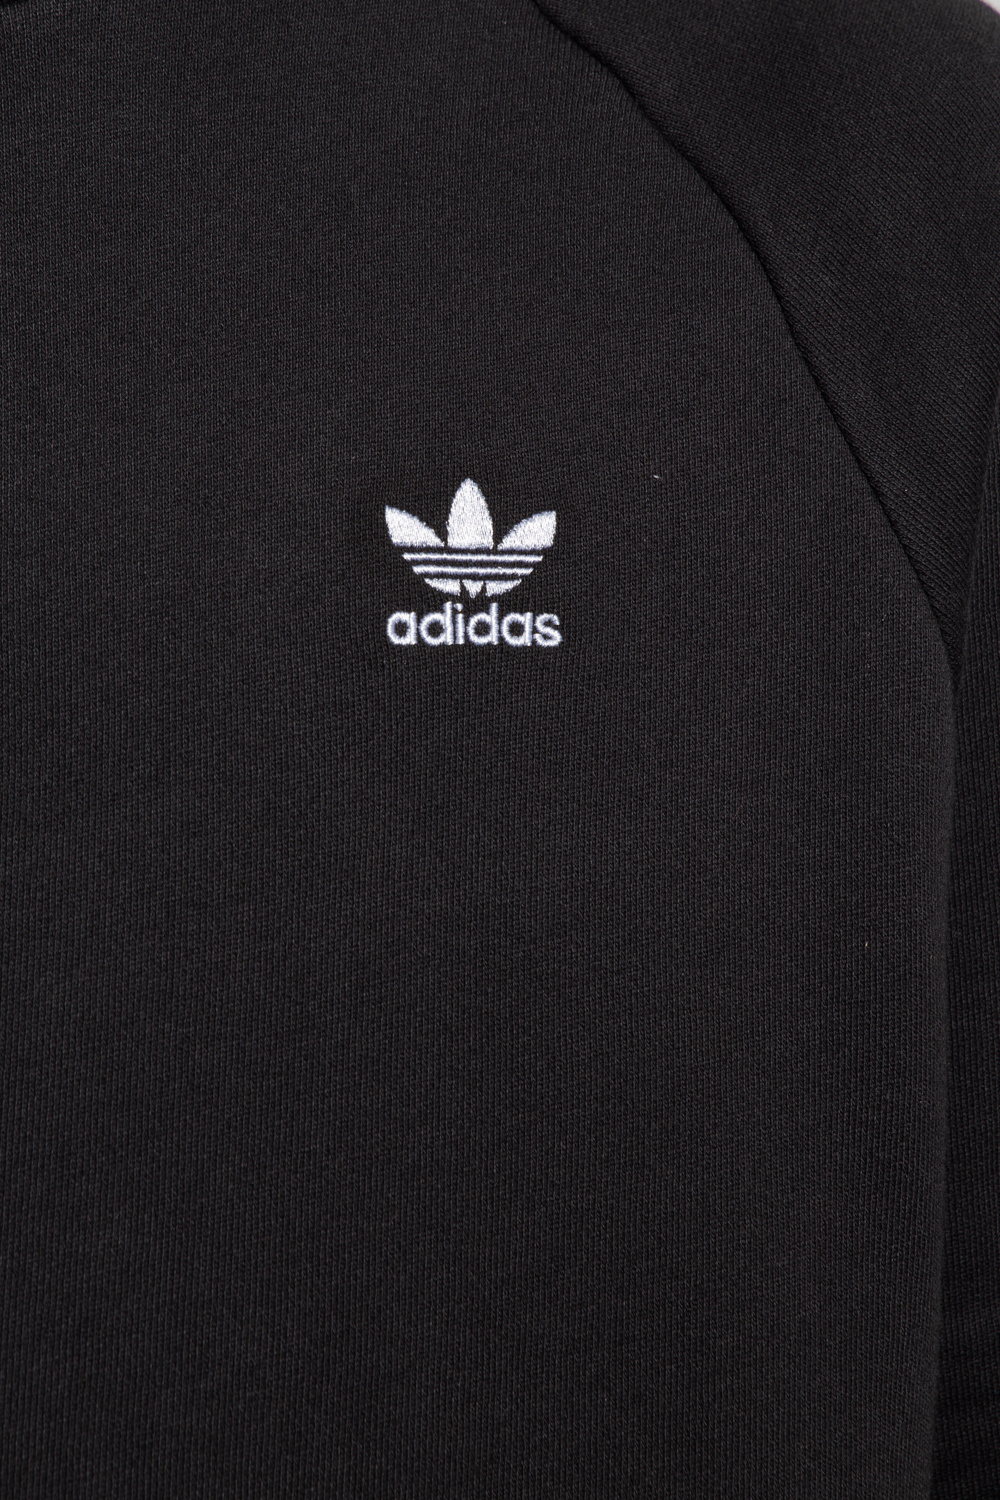 adidas ebay Originals Sweatshirt with logo